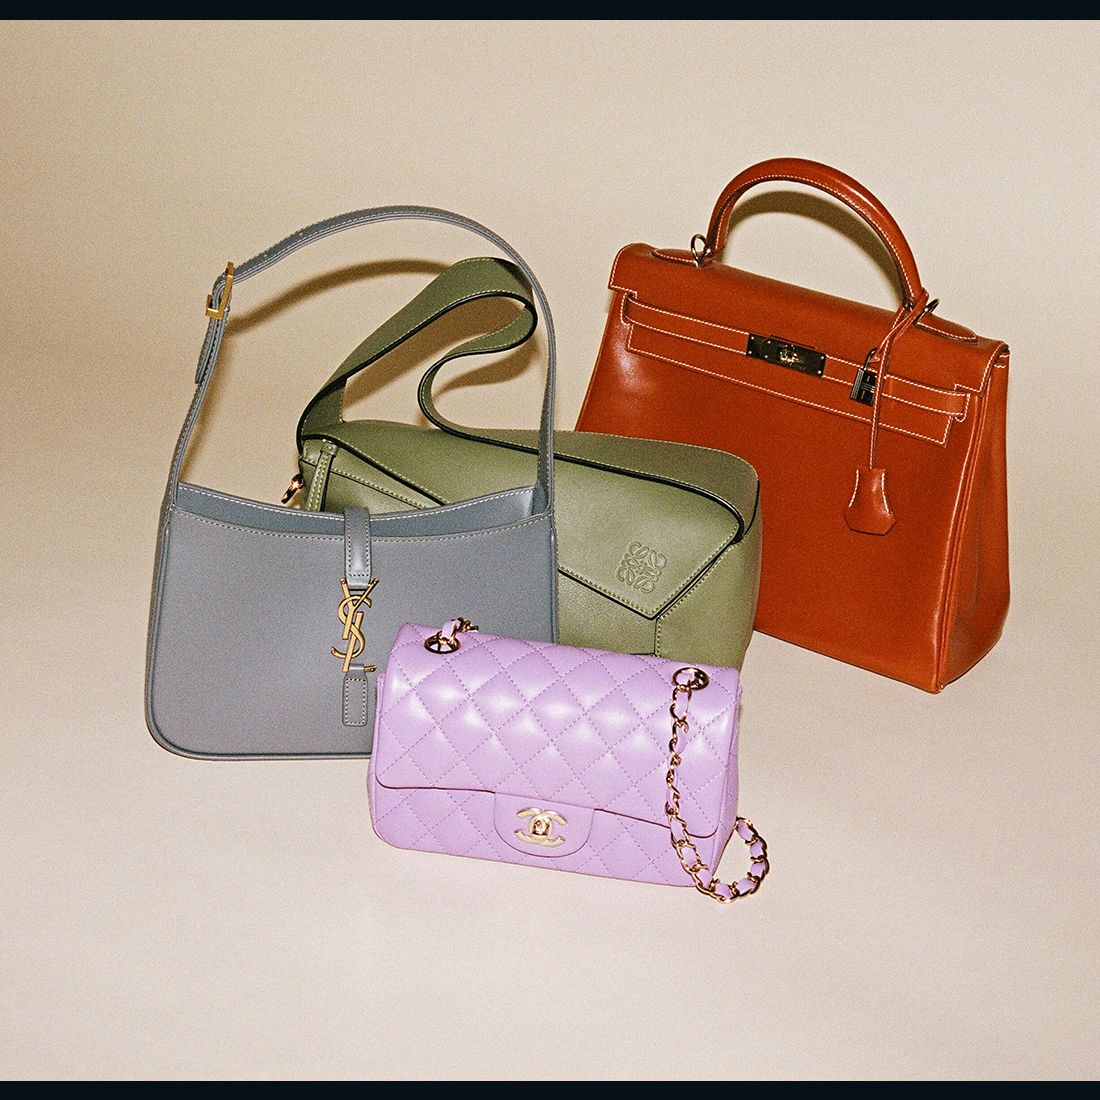 Resale value of Gucci, Chanel, Louis Vuitton handbags is falling | CNN  Business